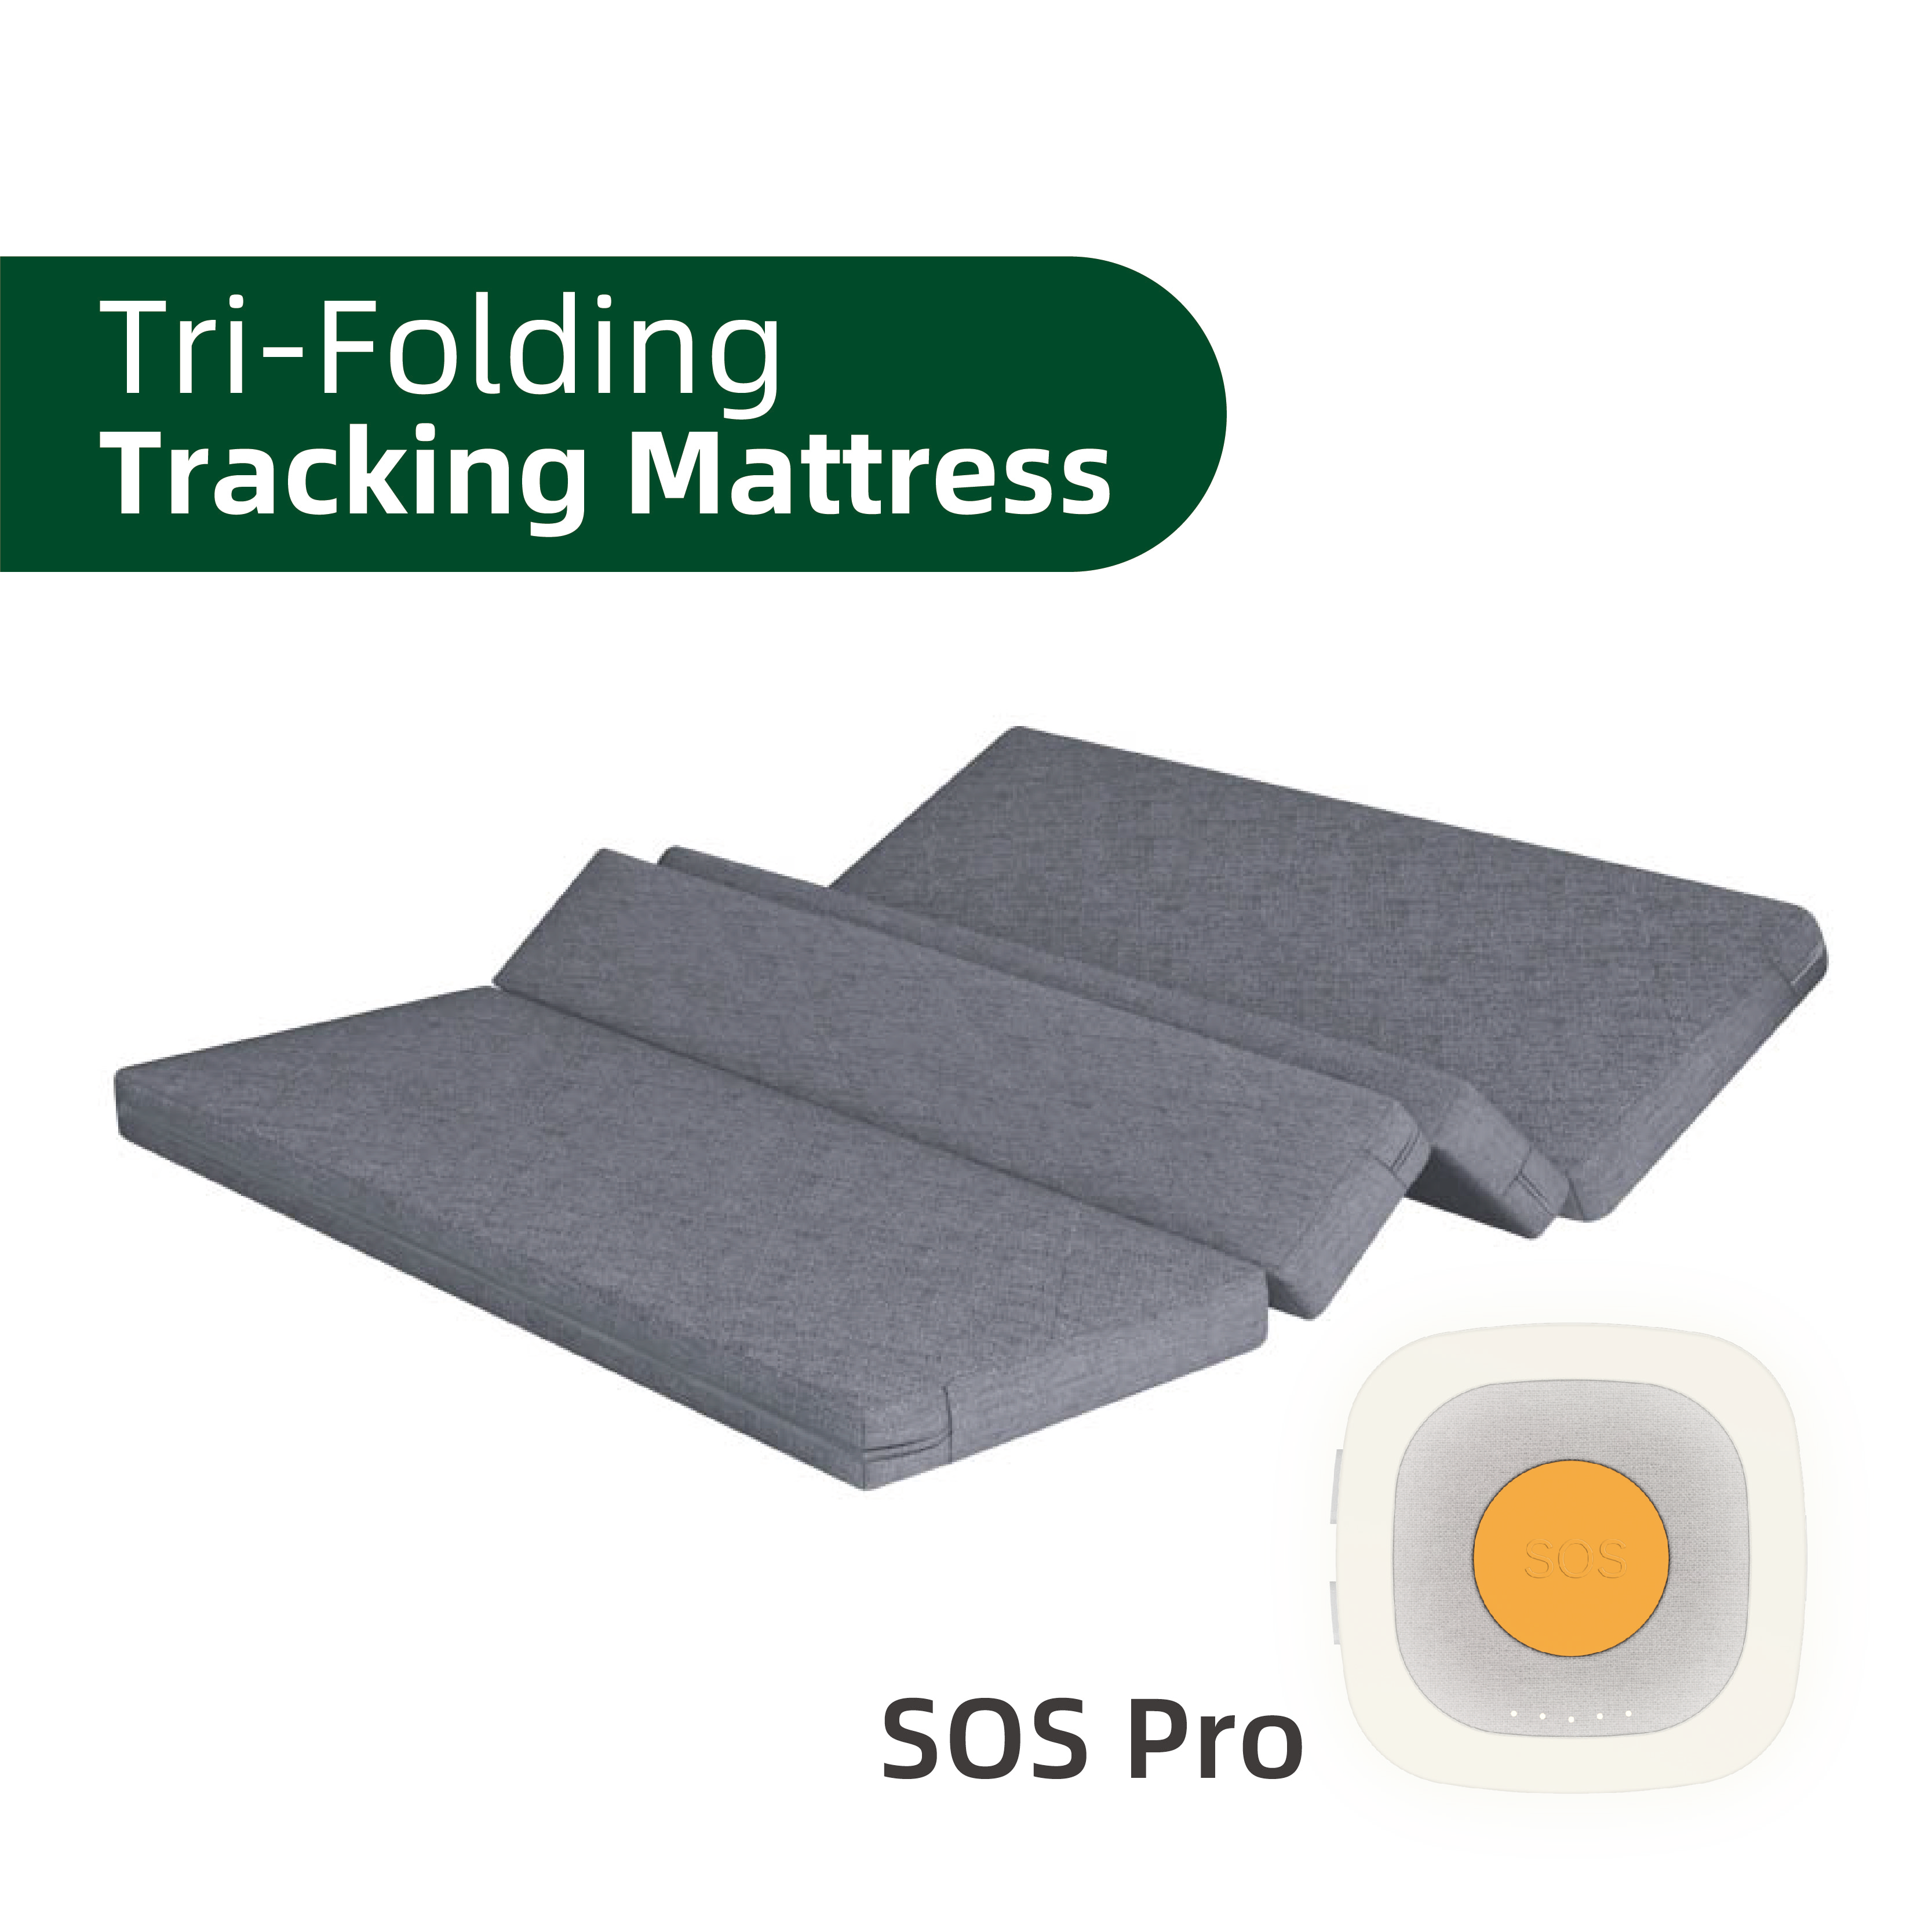 Tri-folding Tracking Mattress